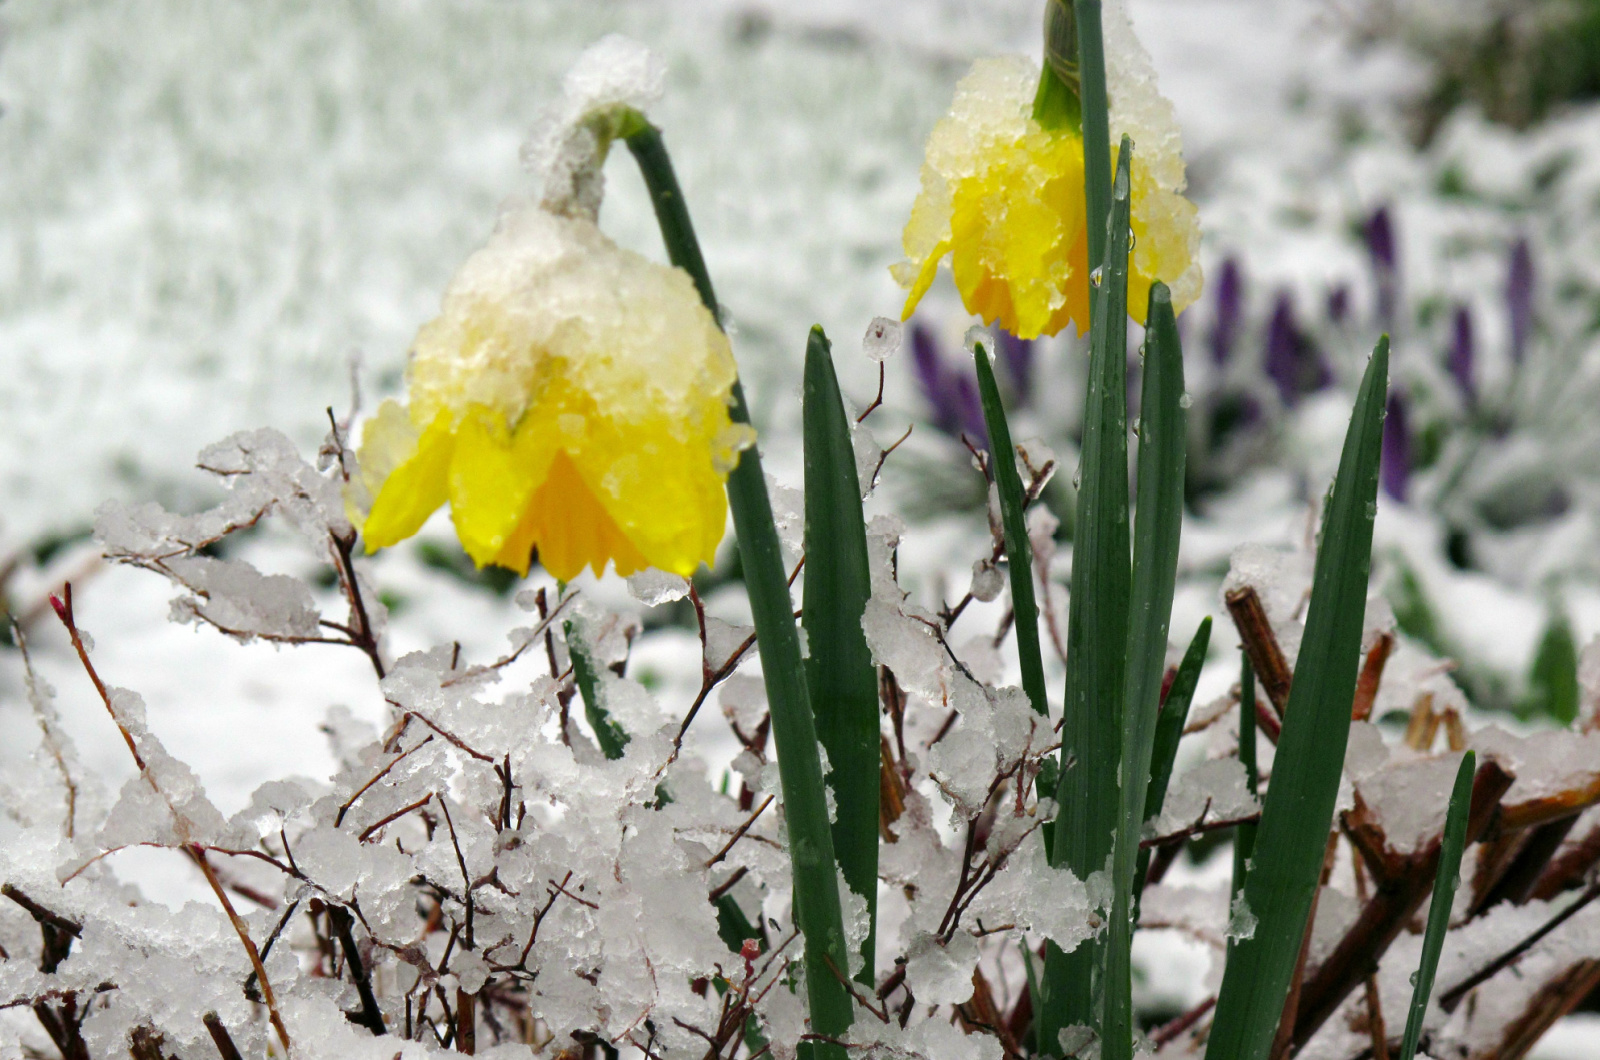 Daffodils in winter